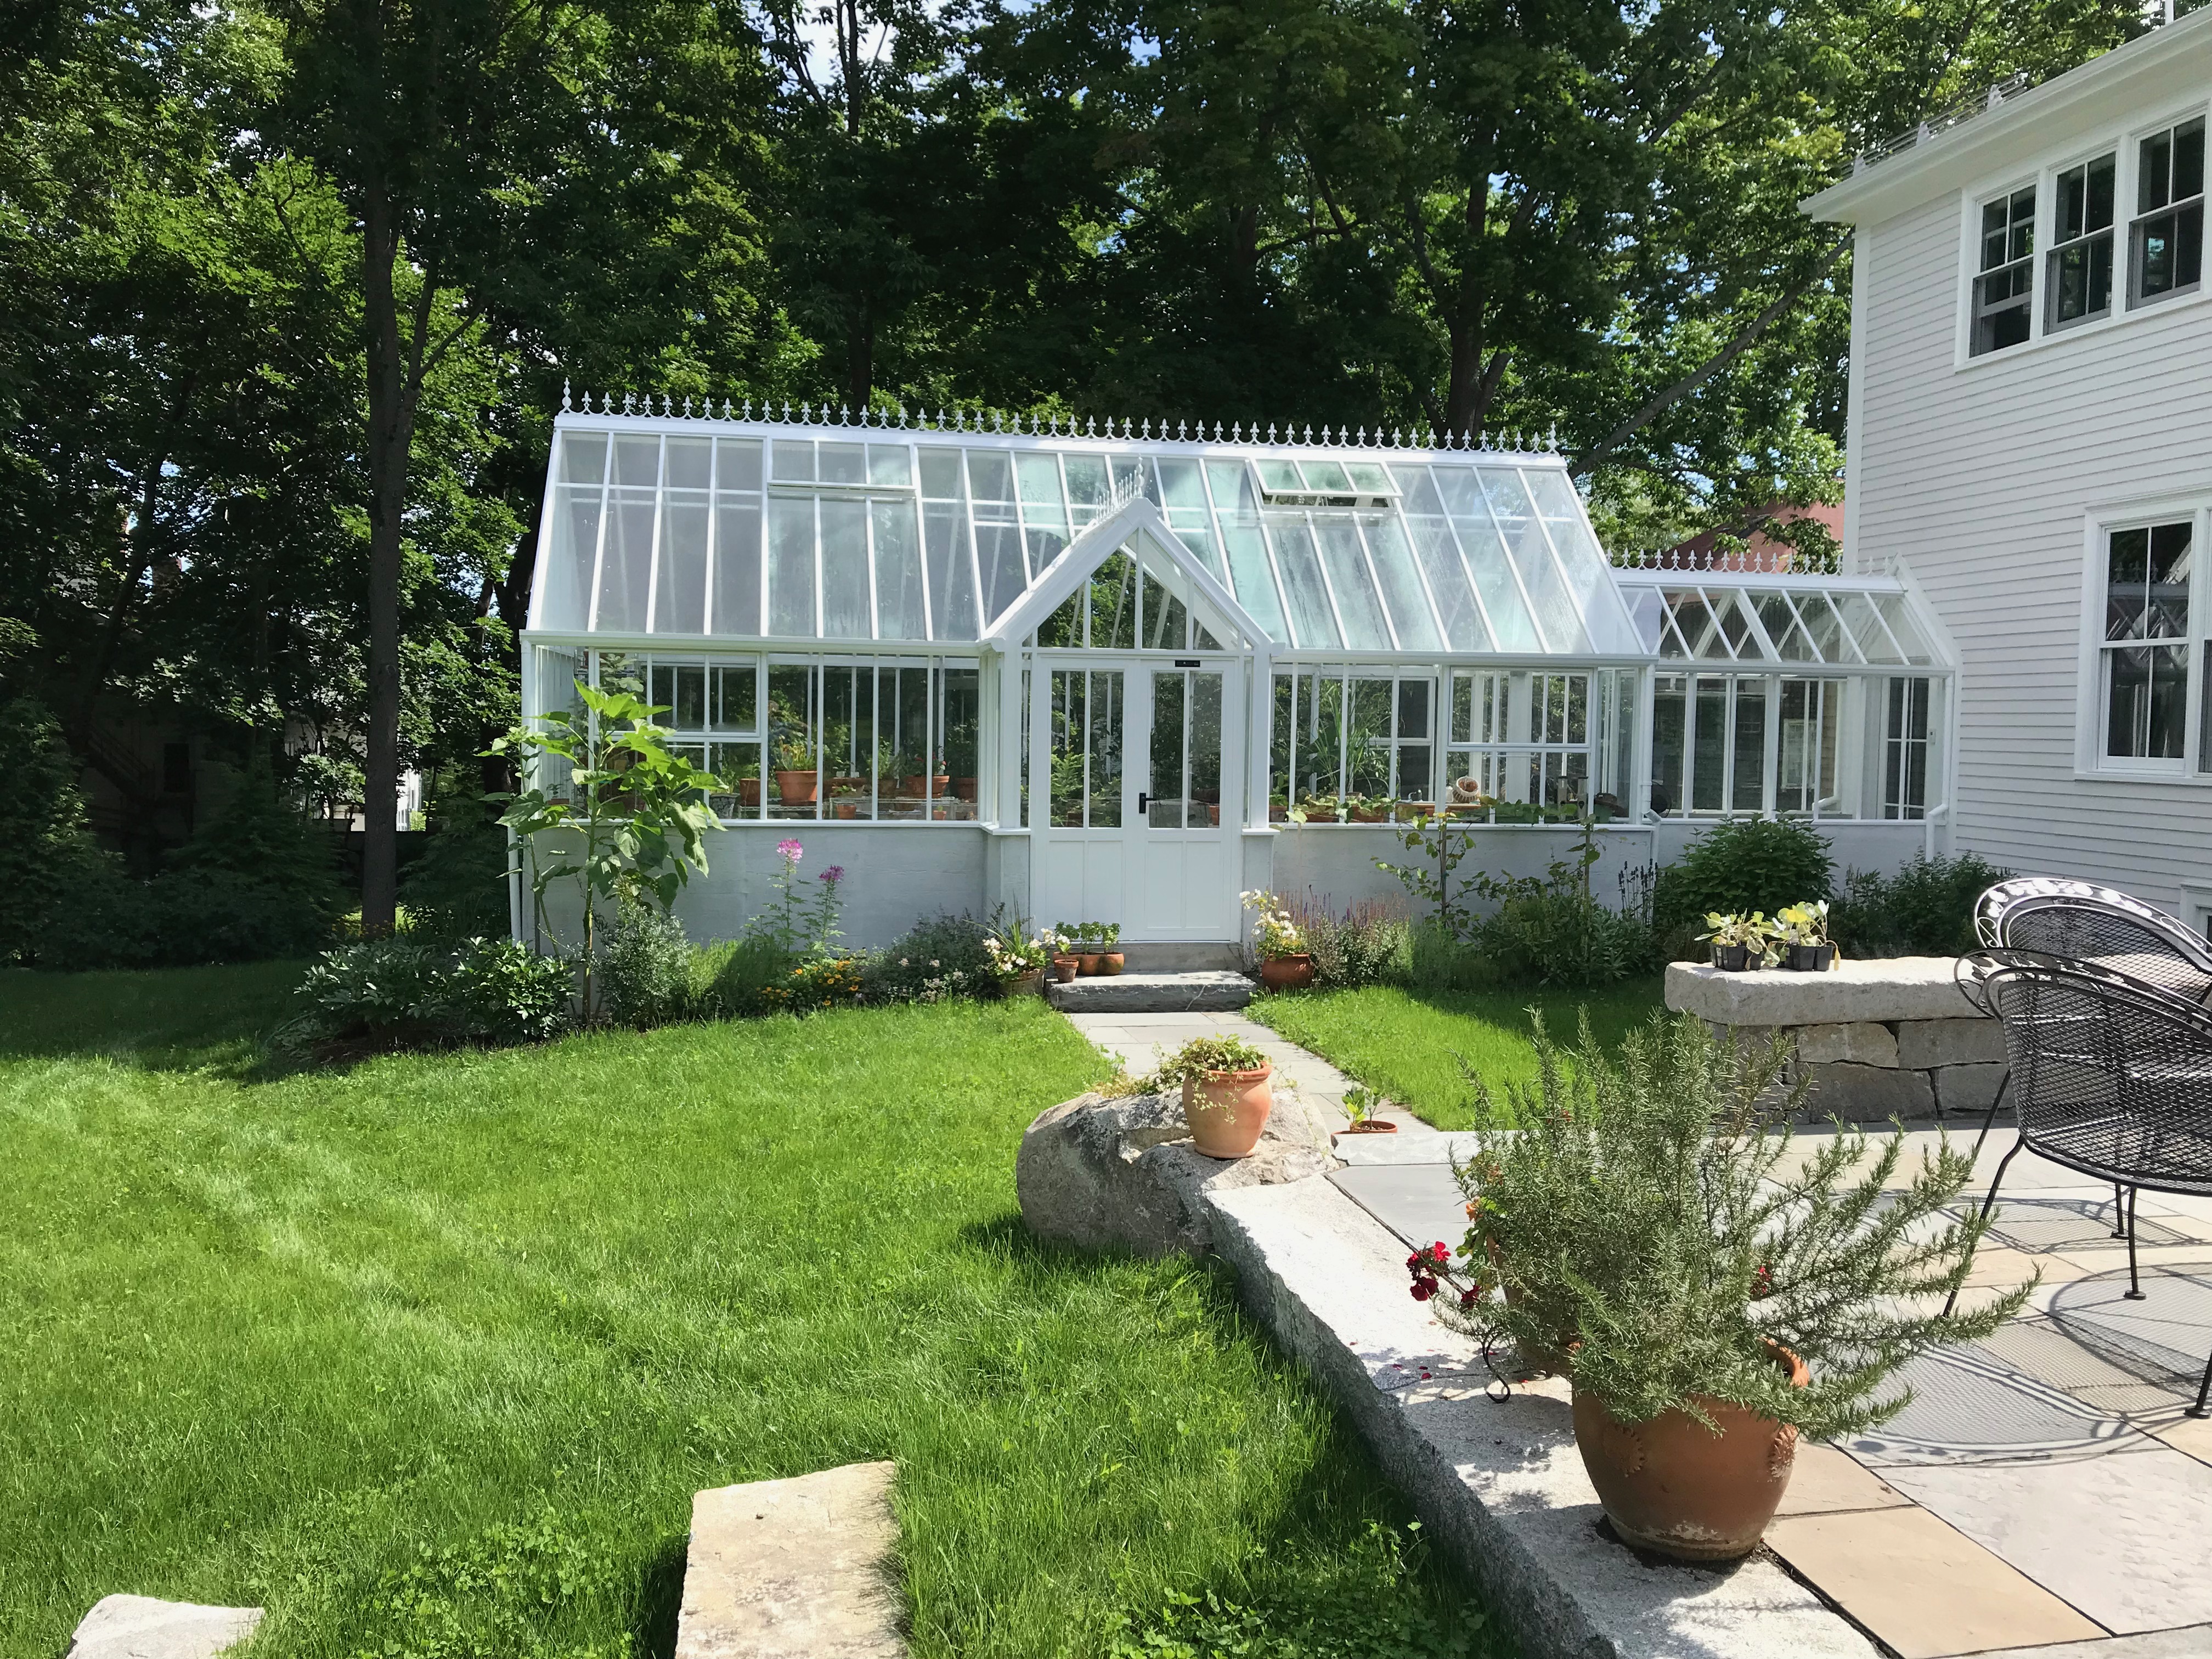 Greenhouse 

